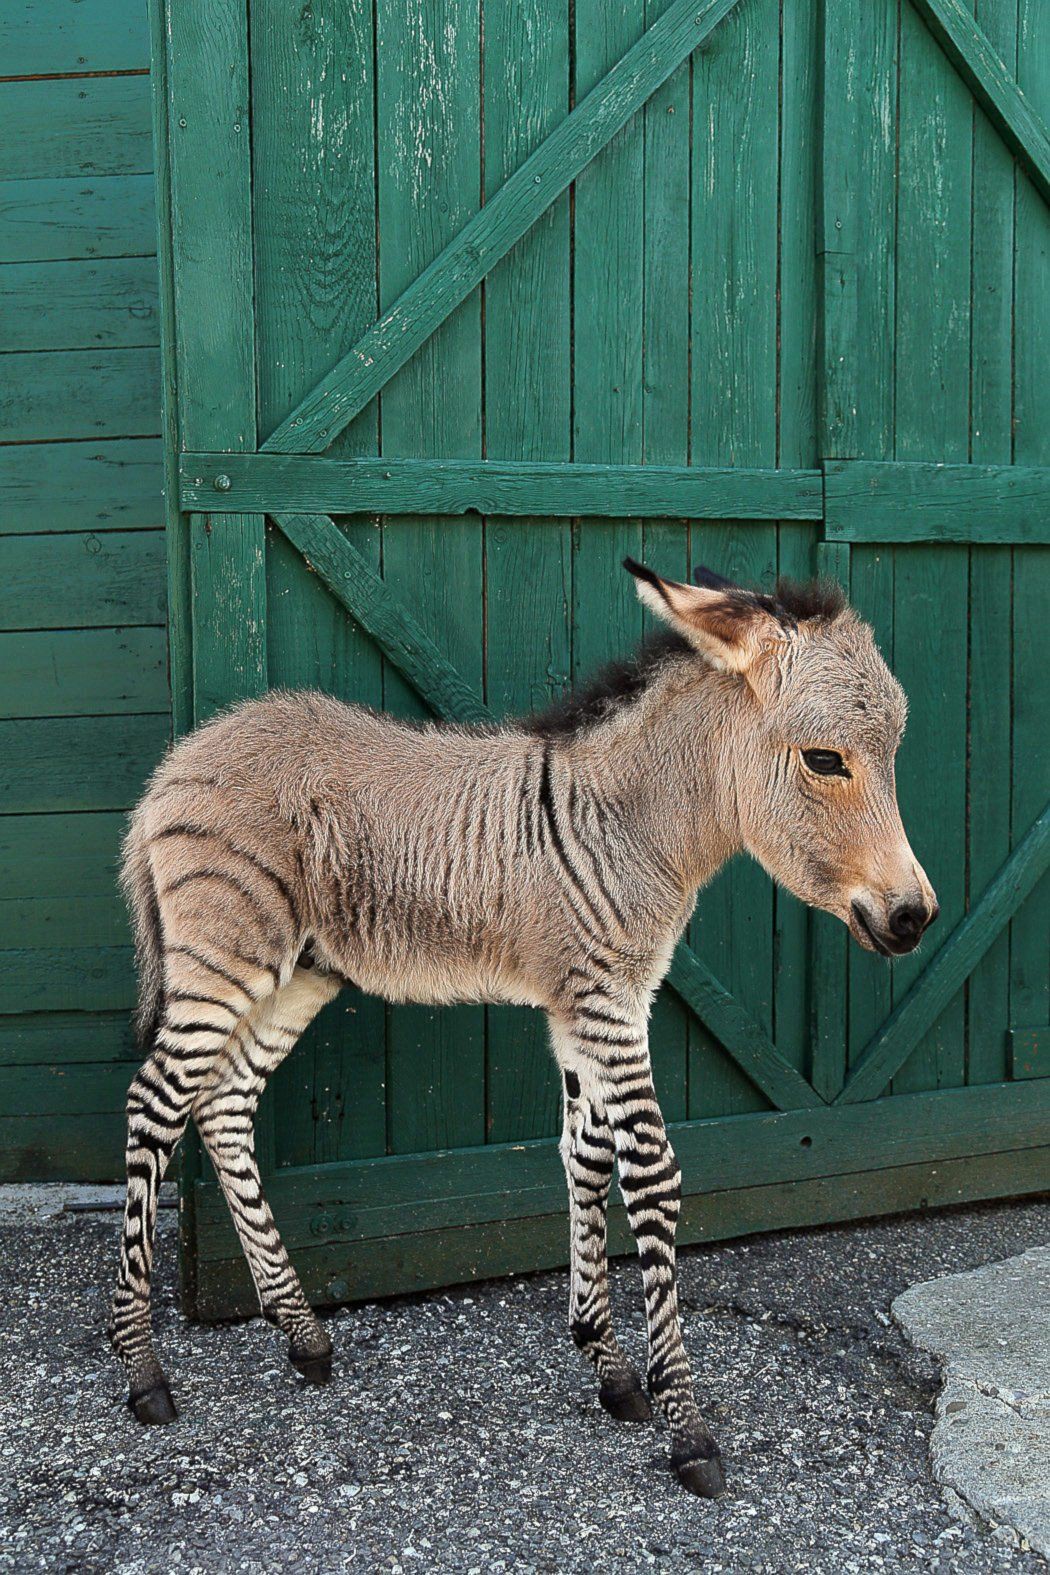 Half zebra half donkey. He's a little zonkey...